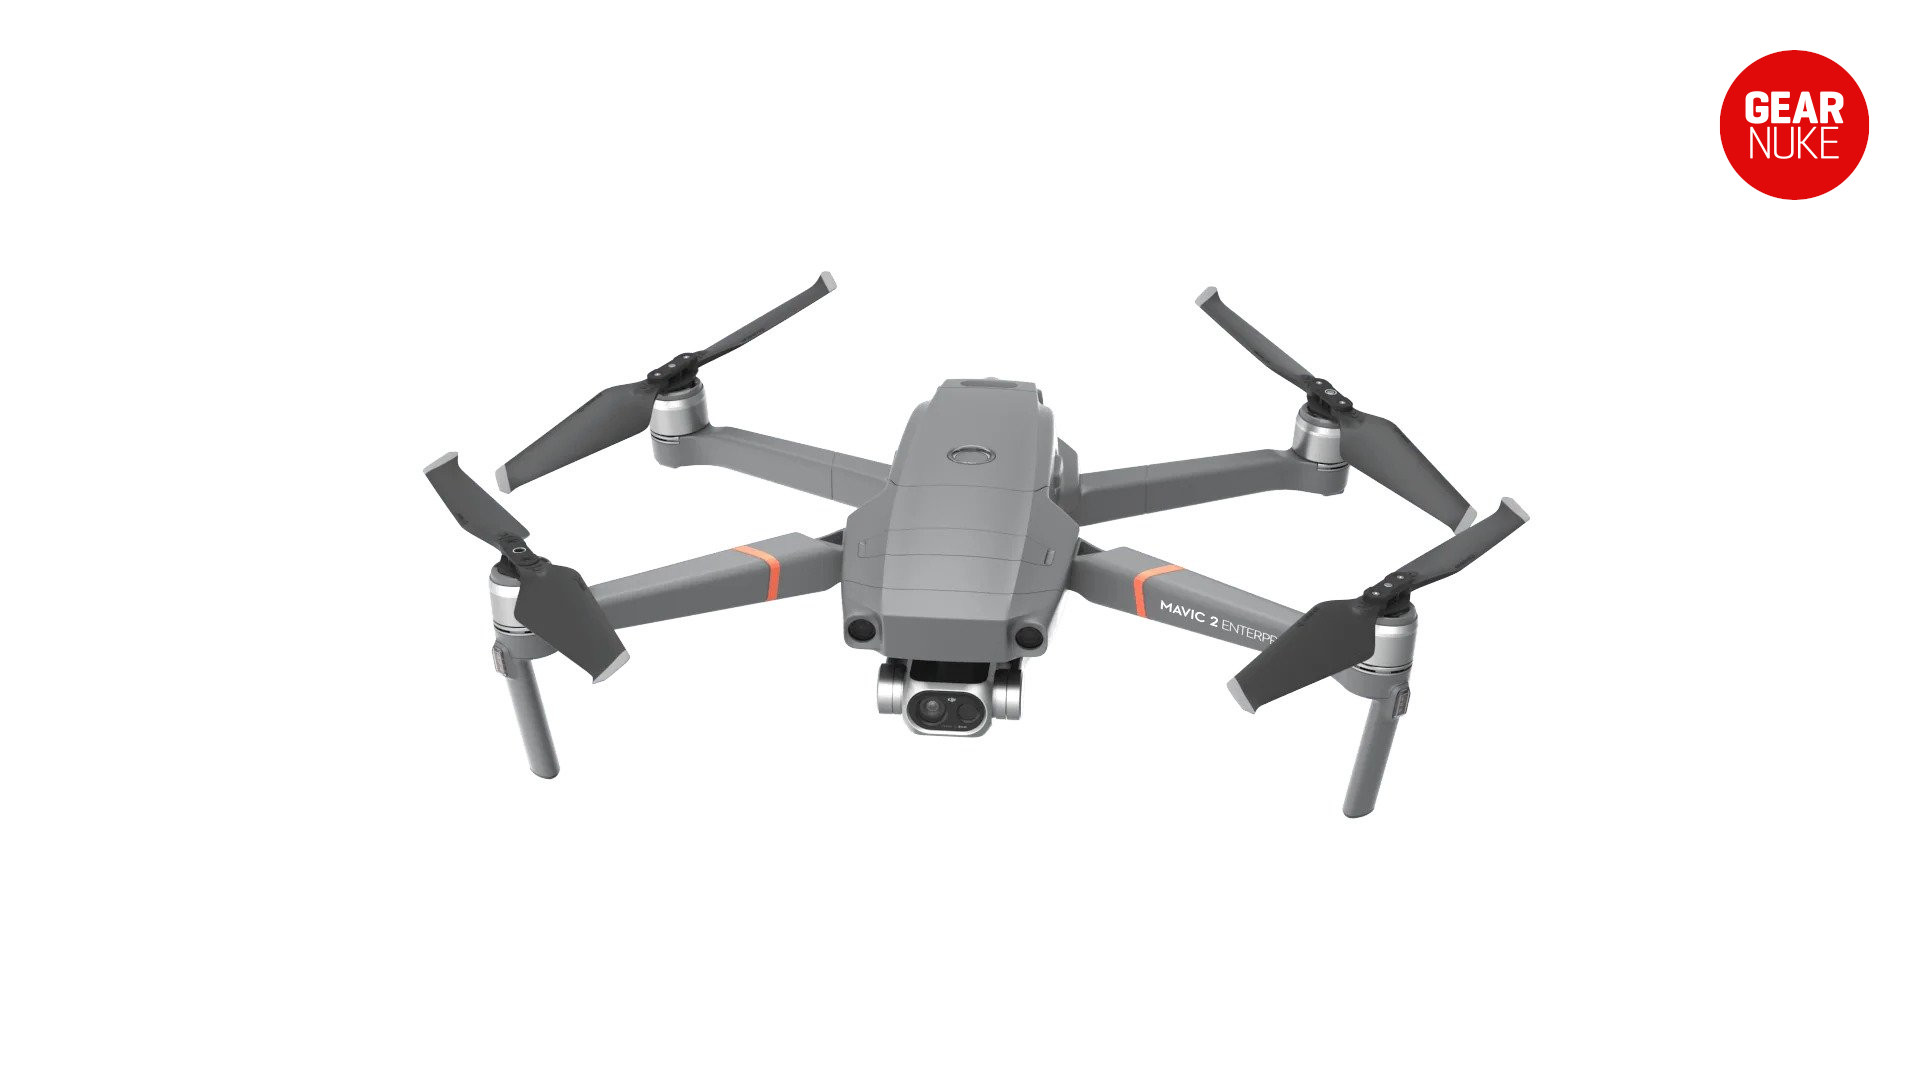 Casey Neistat Cameras - The DJI Mavic 2 Pro Drone